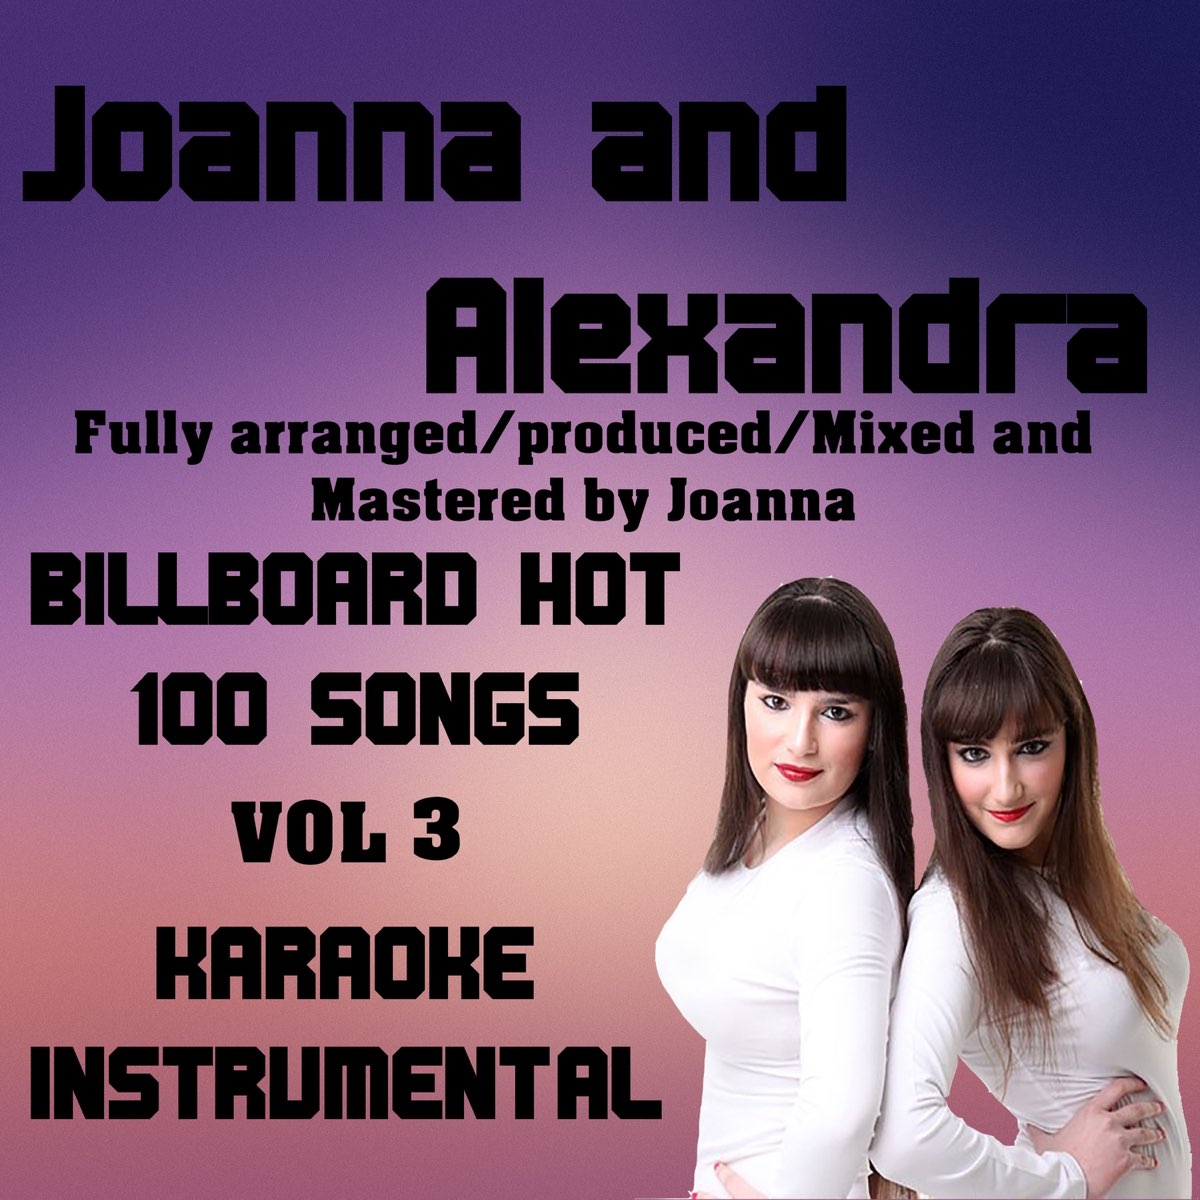 Billboard Hot 100 Songs Karaoke - Instrumental, Vol. 3 by Joanna and  Alexandra on Apple Music